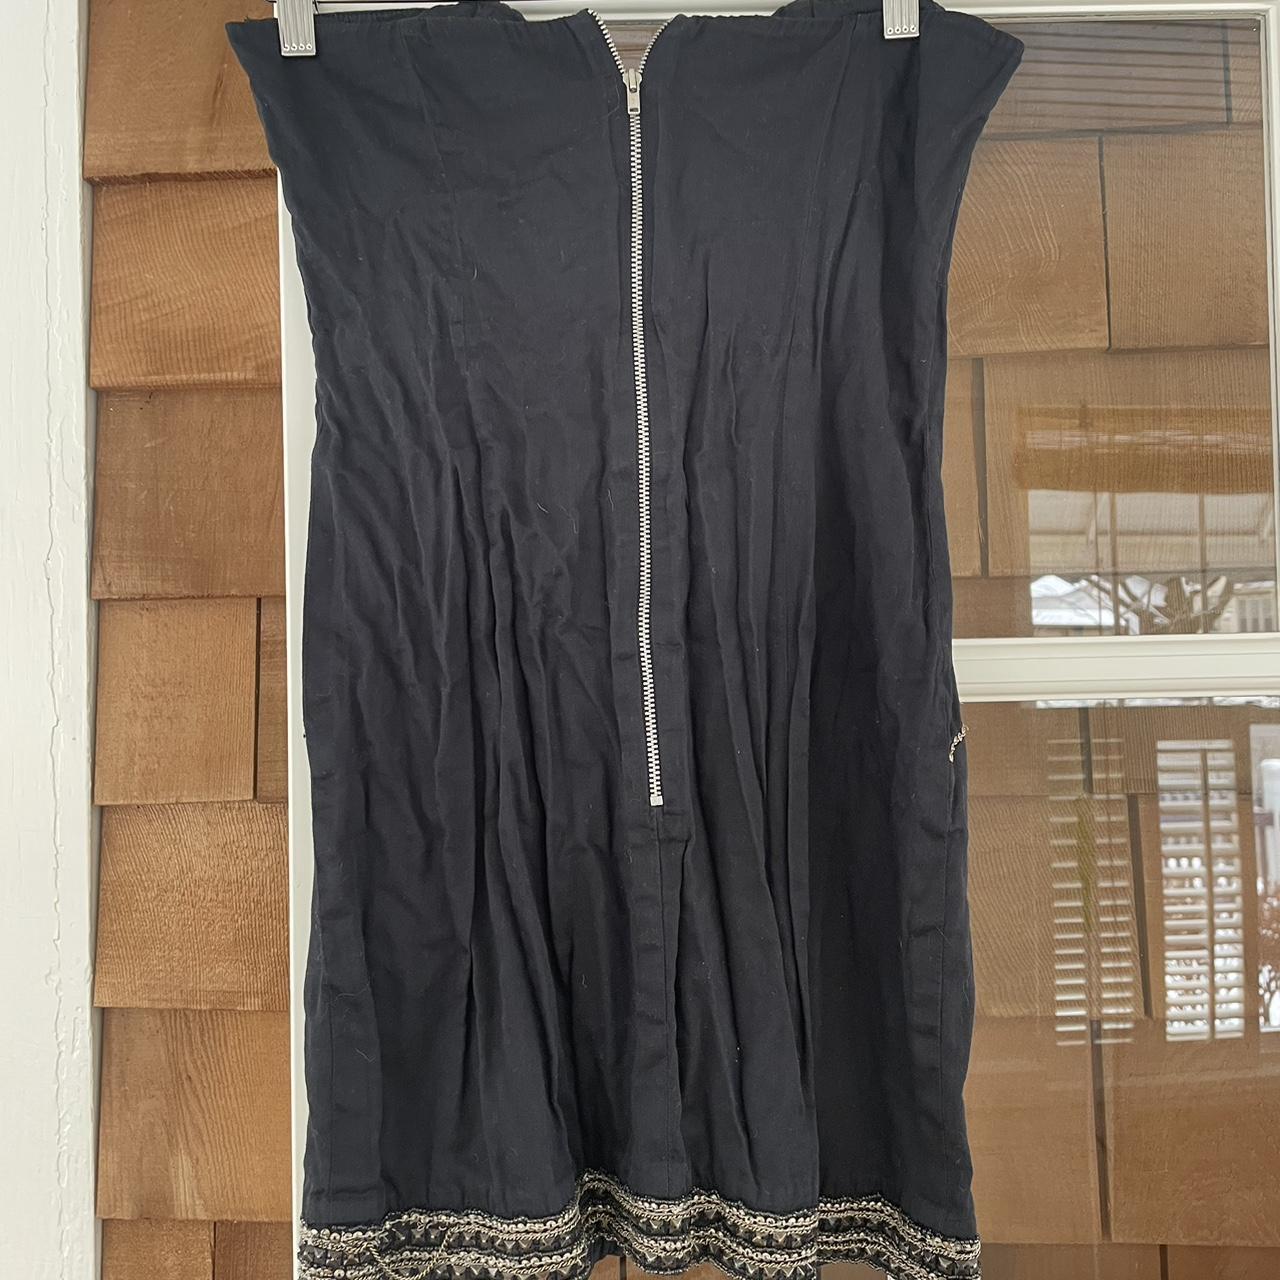 Vintage French Connection Mini Dress *bought in Paris* - Depop